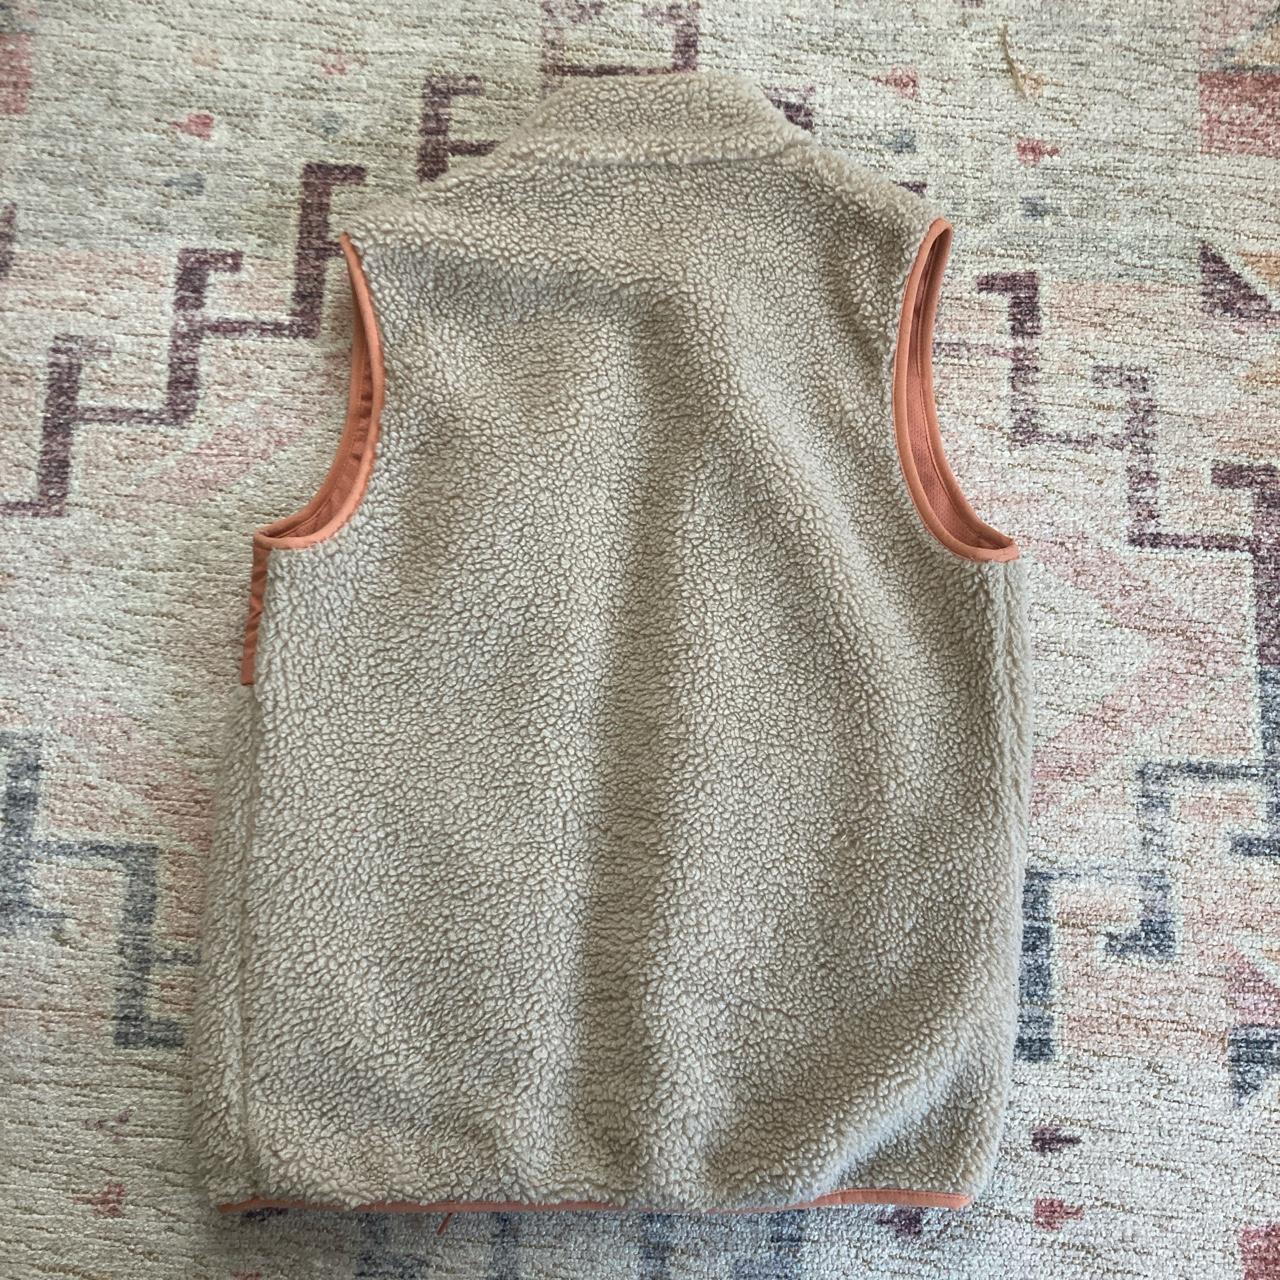 Product Image 4 - Madewell X Penfield fleece vest

Peach